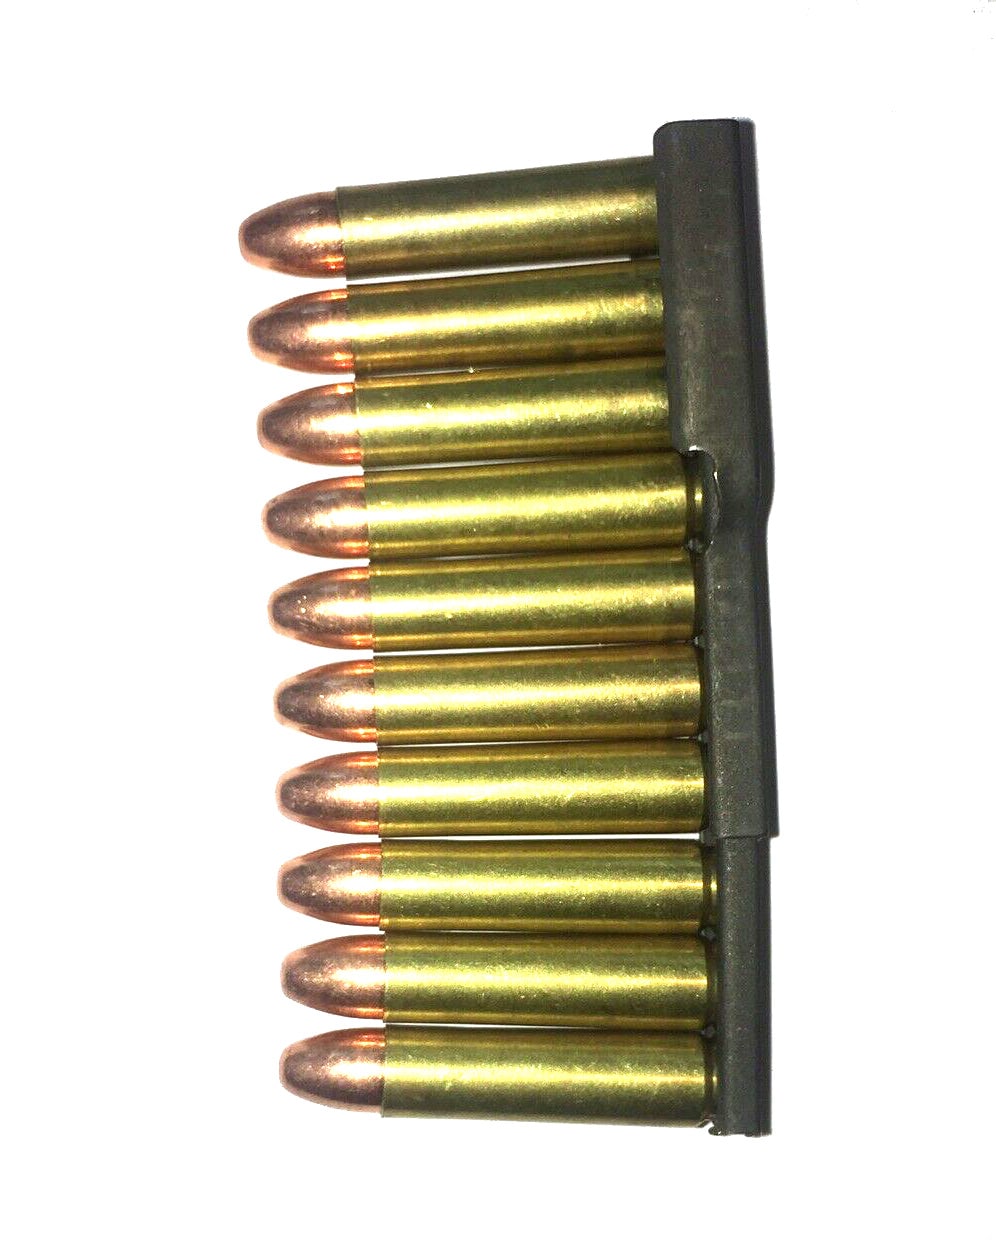 .30 Carbine Dummy Rounds Snap Caps Fake Bullets in a M1 Carbine stripper clip J&M Spec INERT